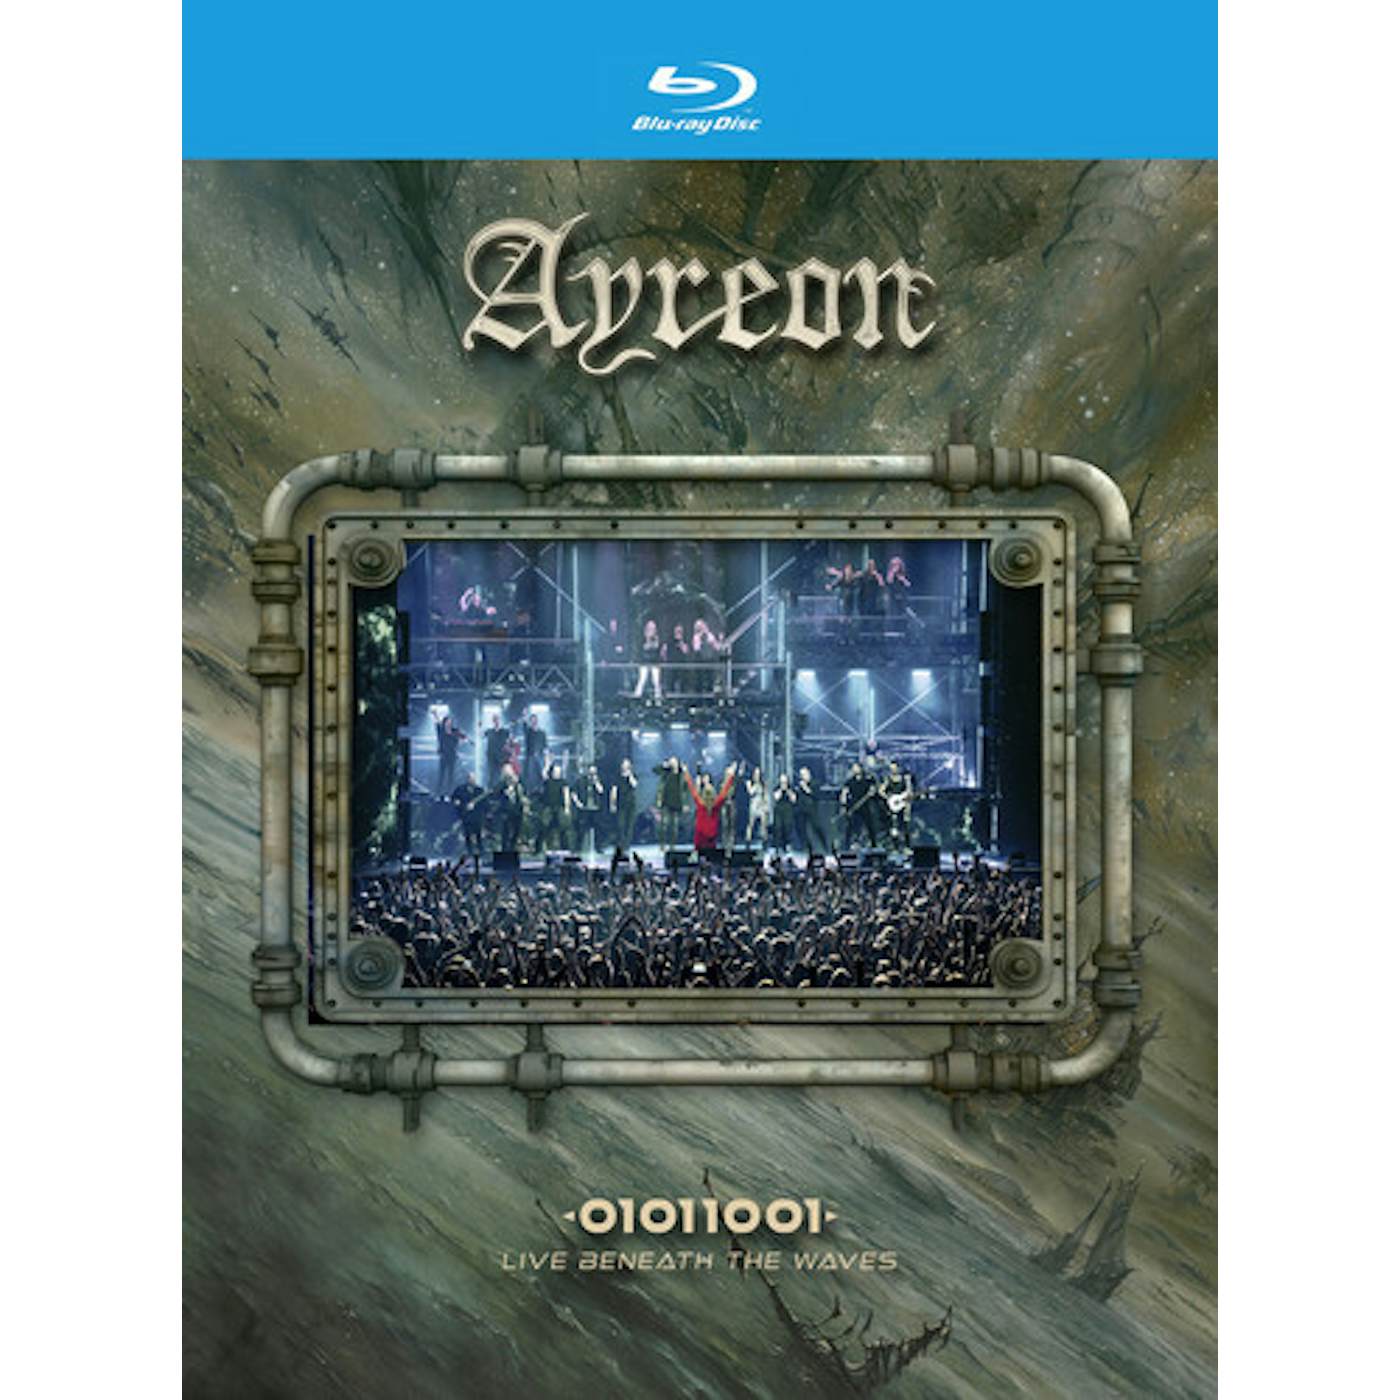 Ayreon 01011001 - LIVE BENEATH THE WAVES / (WBR) Blu-ray